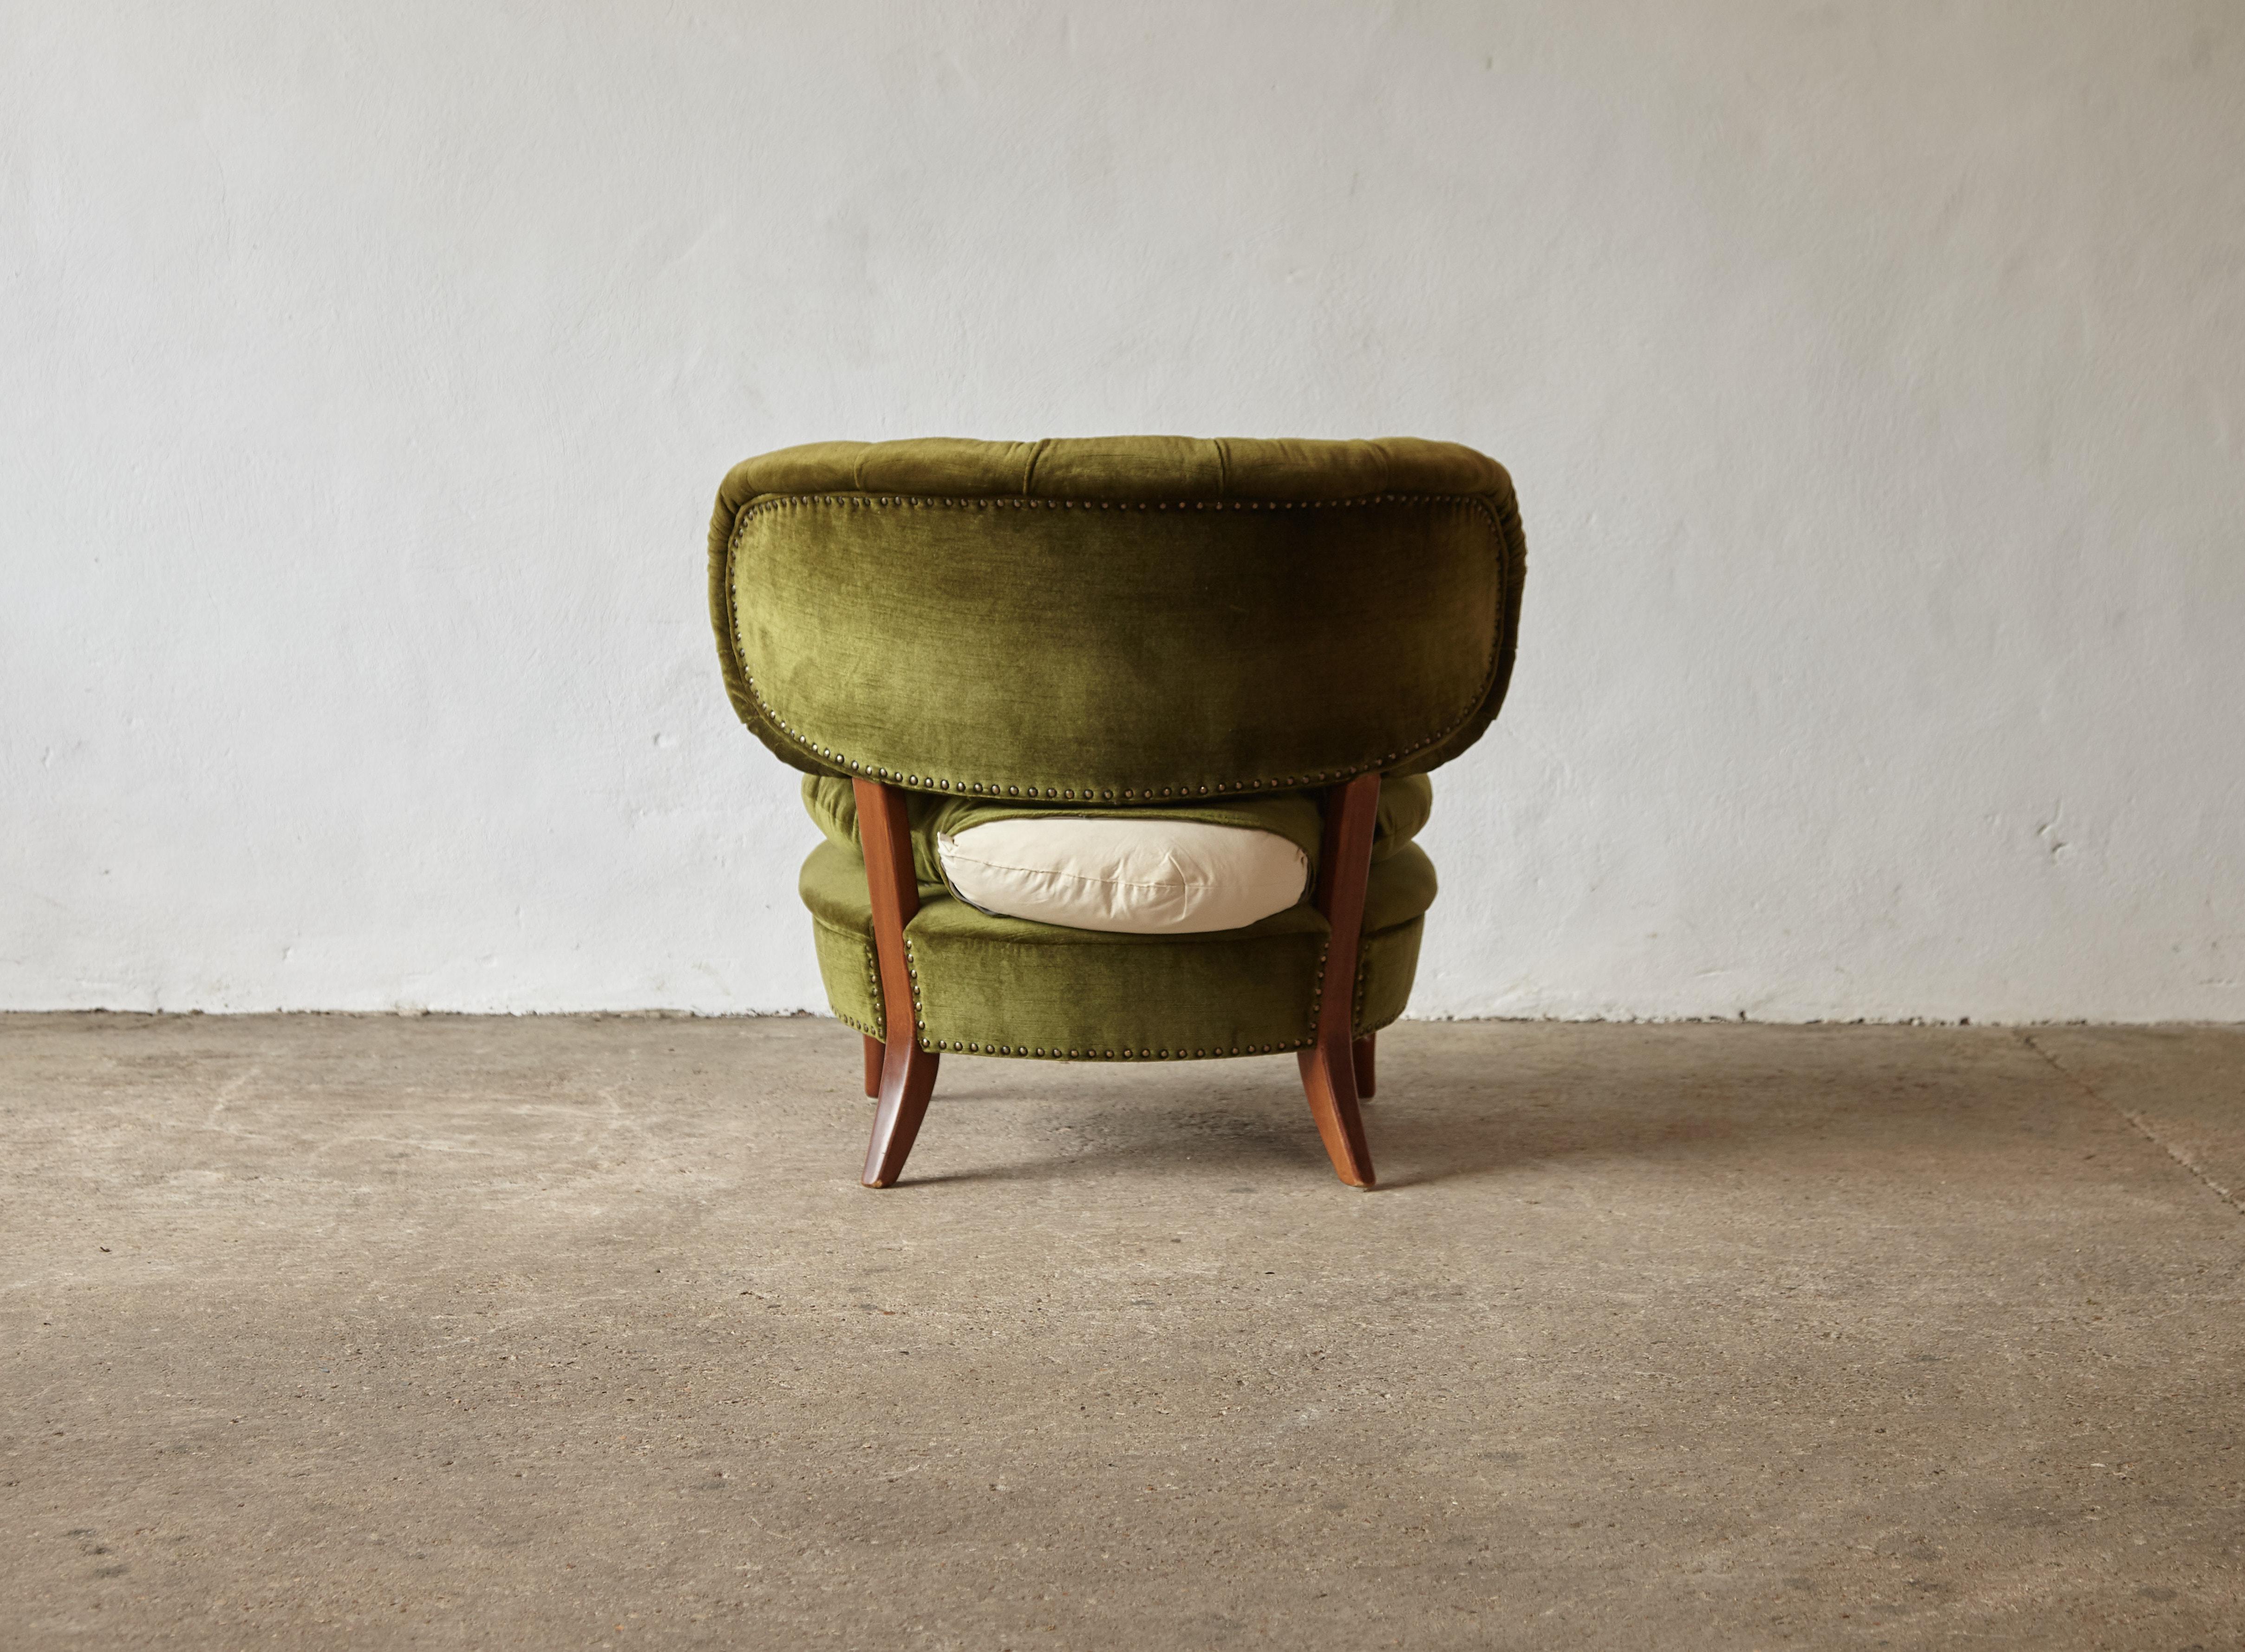 20th Century Otto Schulz “Schulz” Lounge Chair for Jio Möbler, Jönköping, Sweden, 1950s